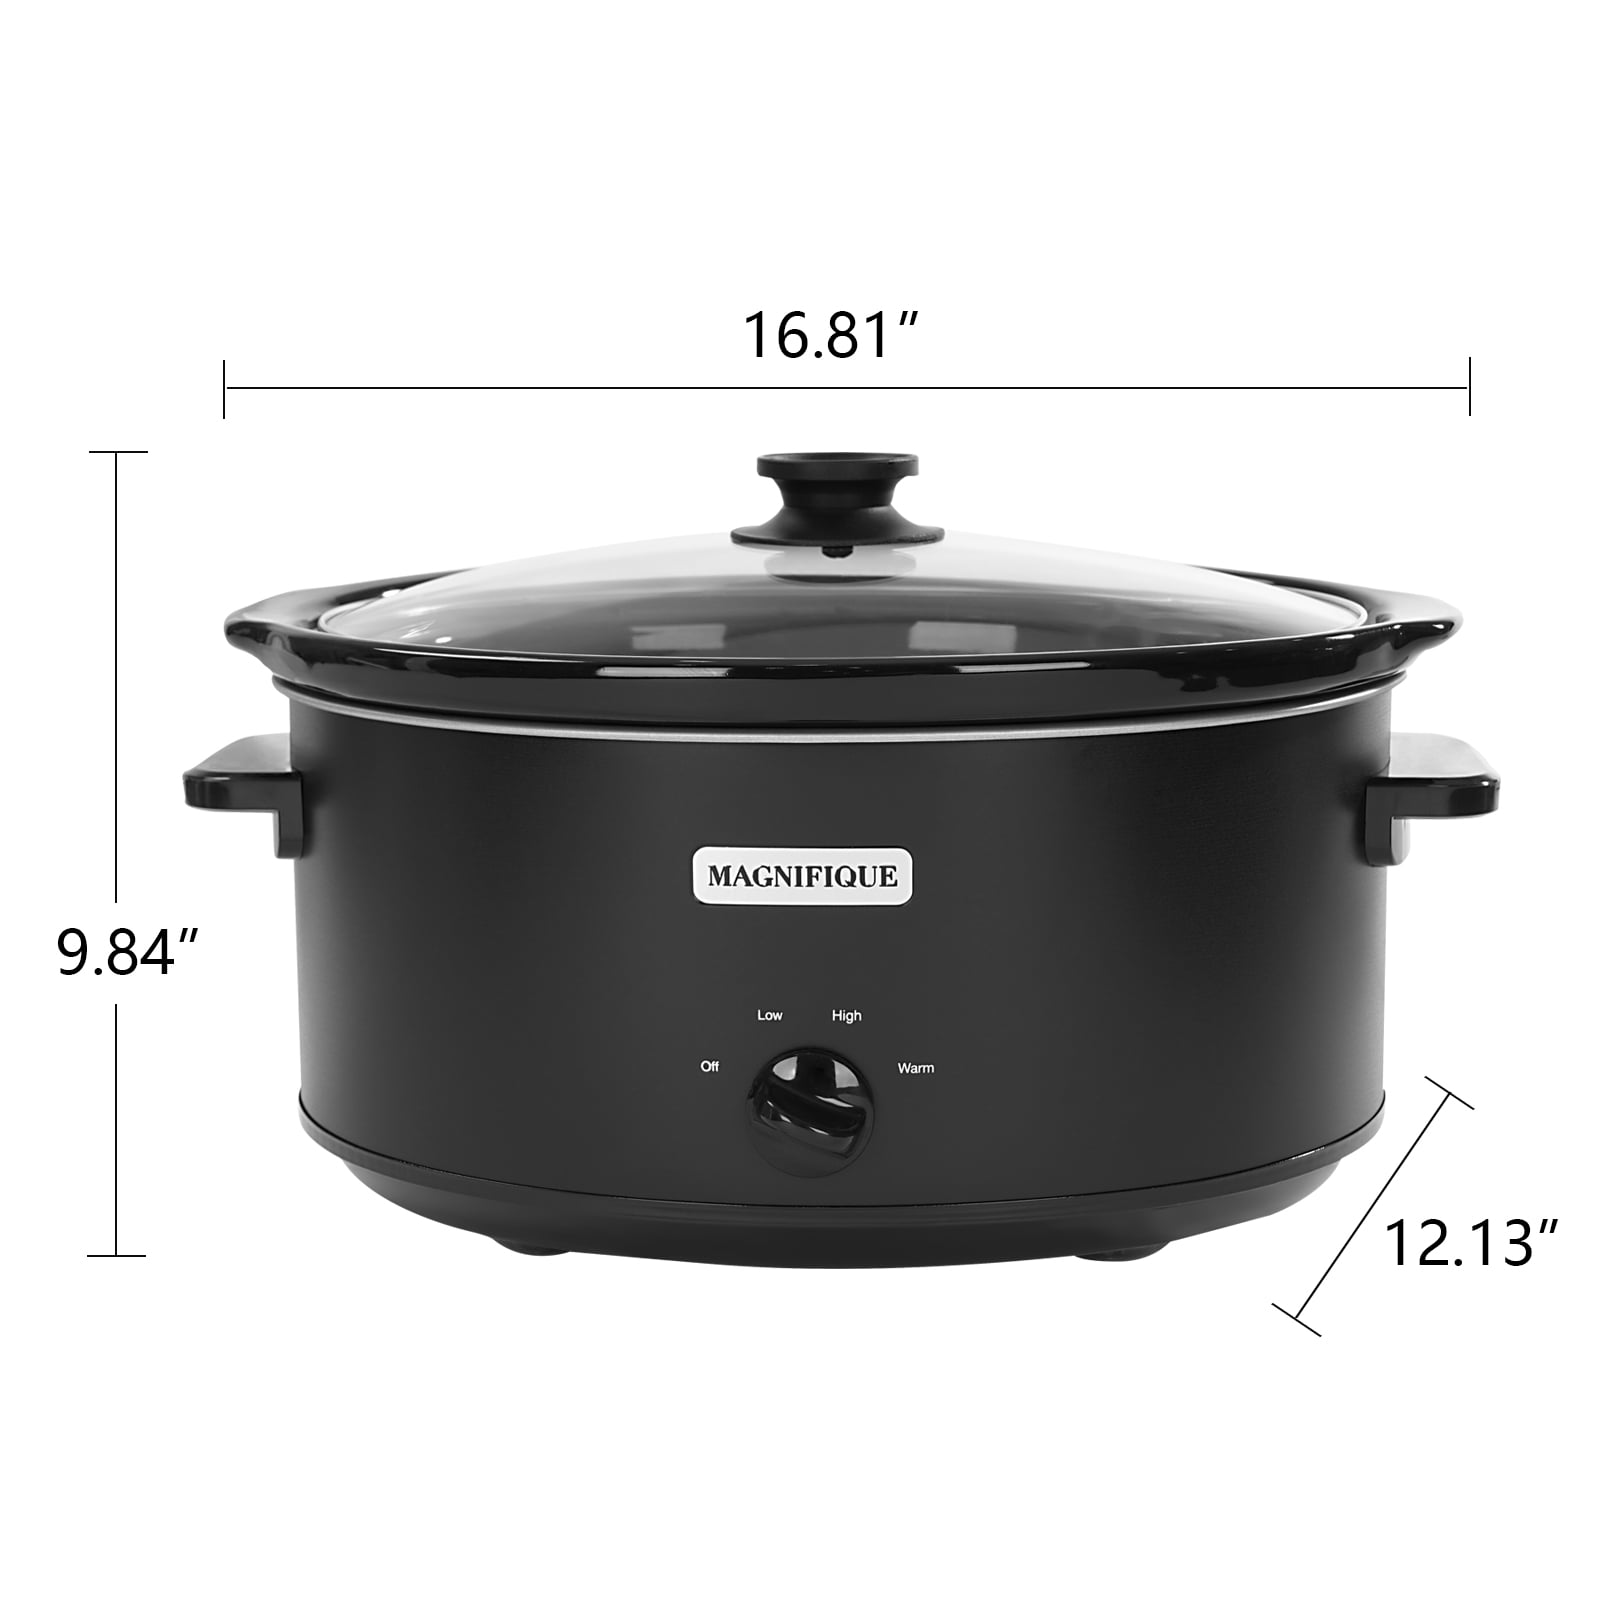 NOZAYA RNAB0BSFG13Y2 8-quart oval manual slow cooker - with